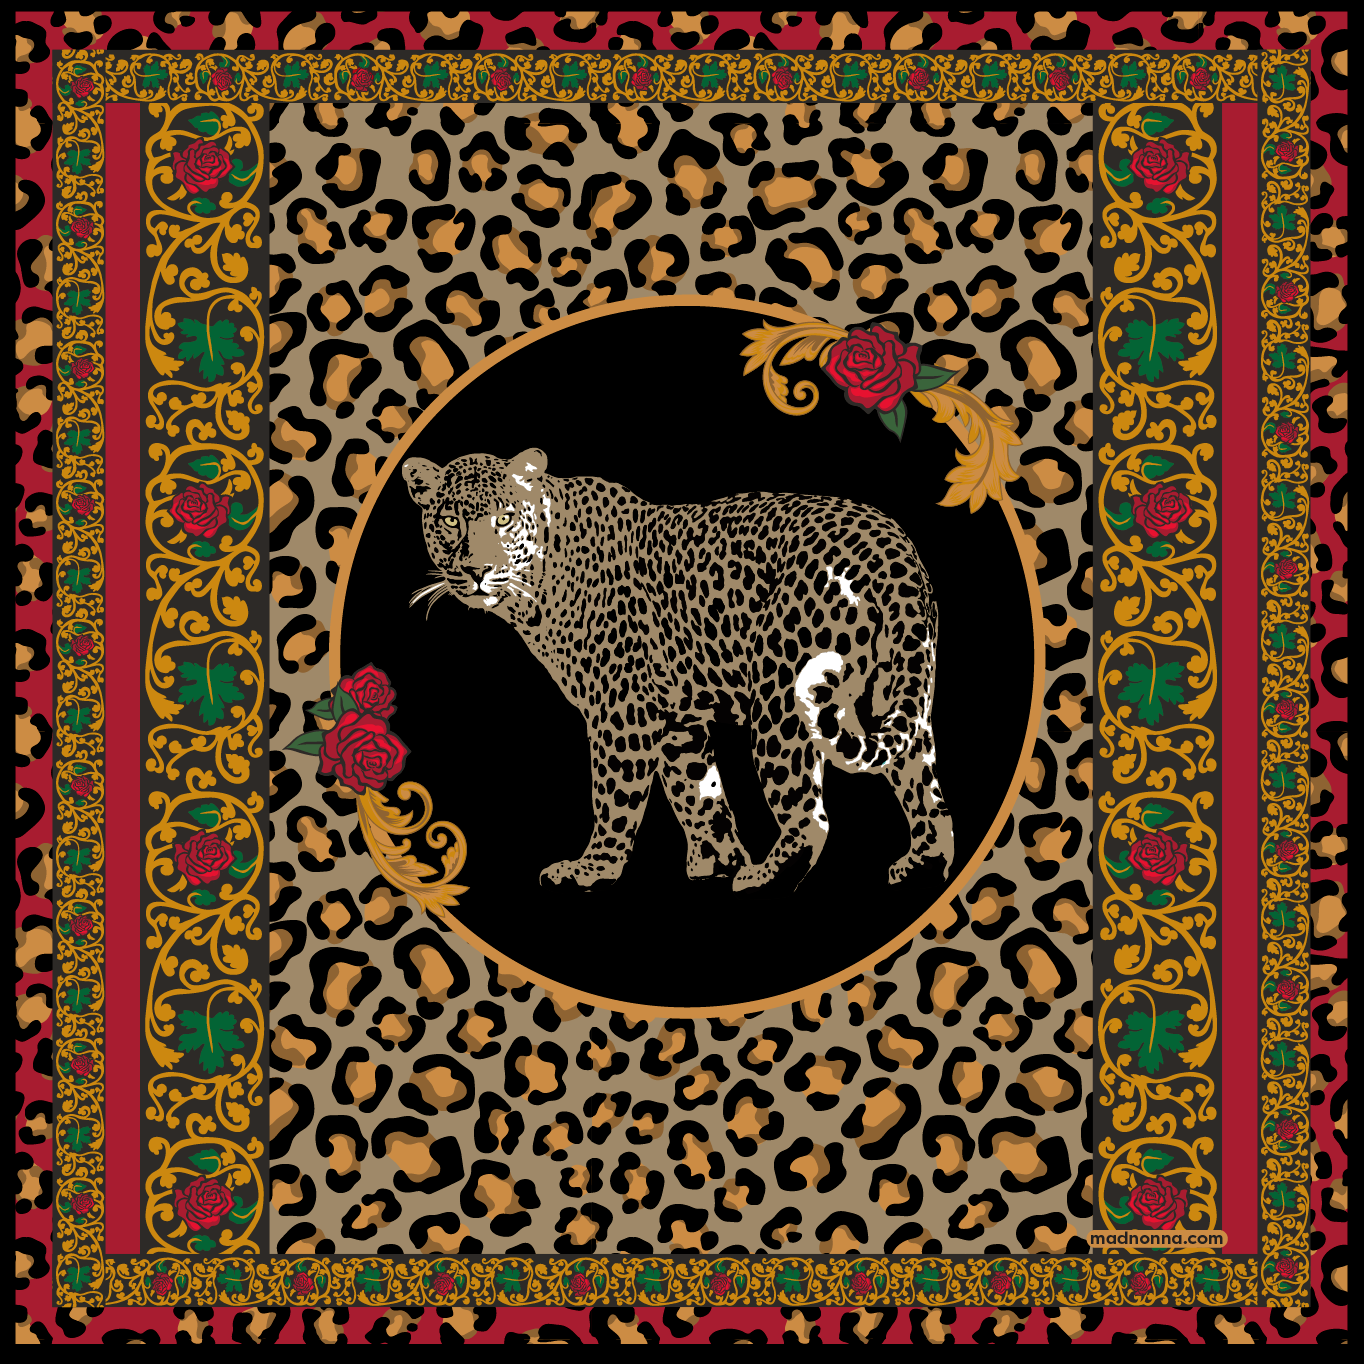 Leopard & Roses silk scarf